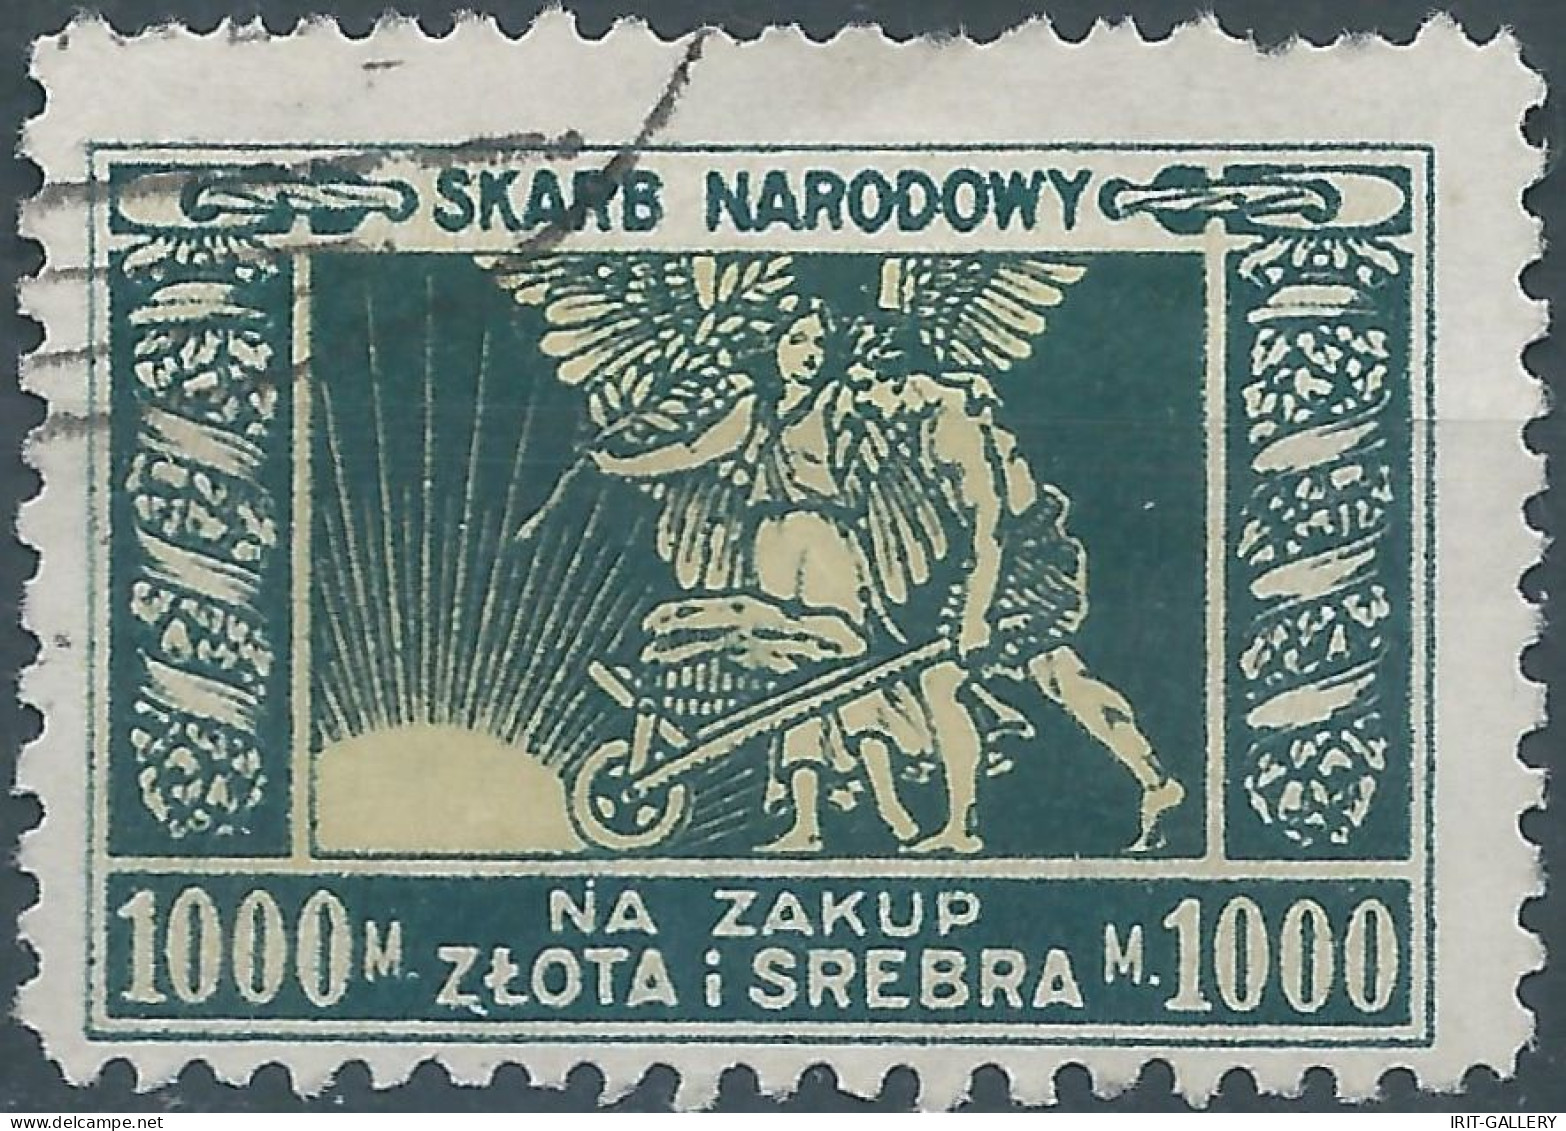 POLONIA-POLAND-POLSKA,1920 Revenue Stamp SKARB NARODOWY NA ZAKUP ZLOTA I SREBRA-NATIONAL TREASURE,1000M,Obliterated - Revenue Stamps